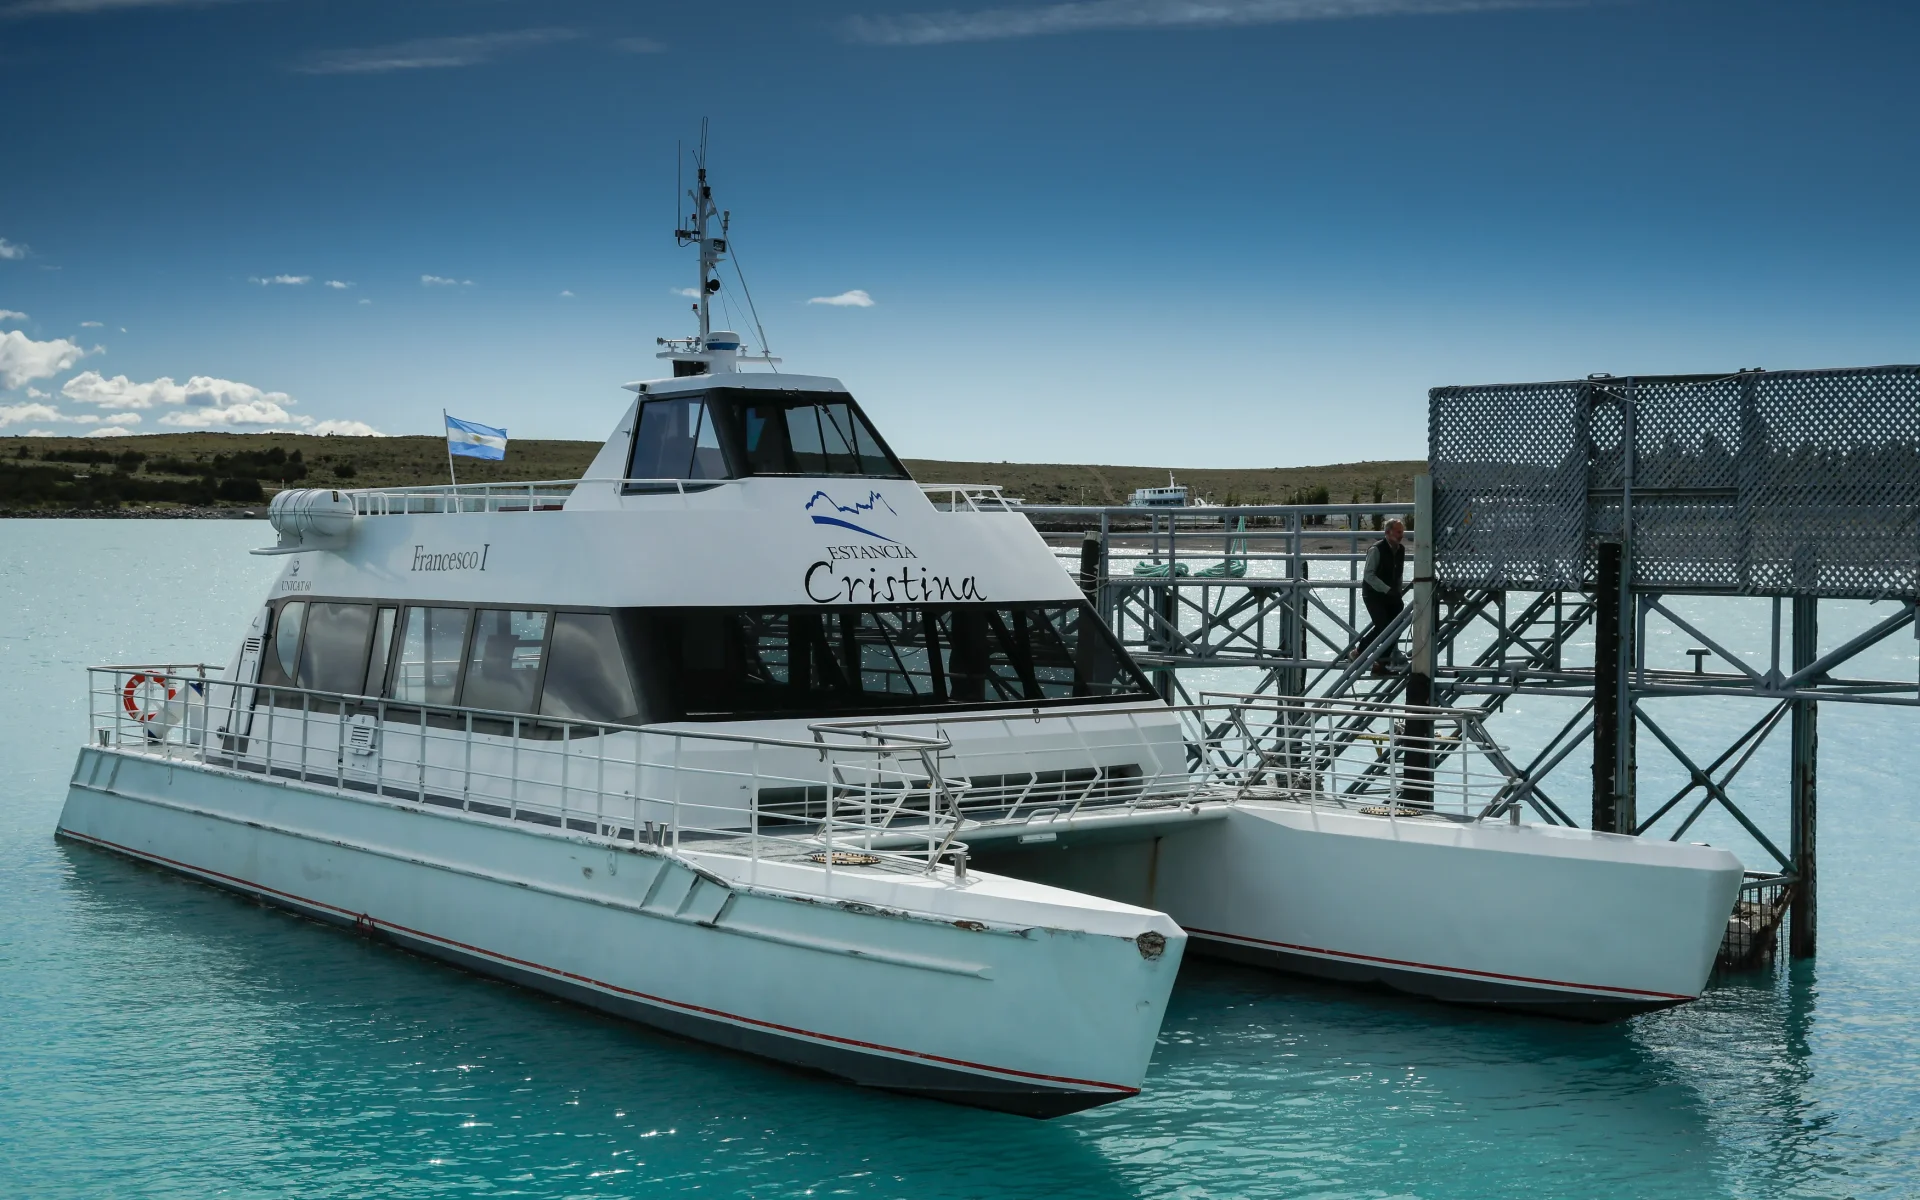 Estancia Cristina's catamaran is sleek and white, waiting on Lago Argentino to take guests on trip.